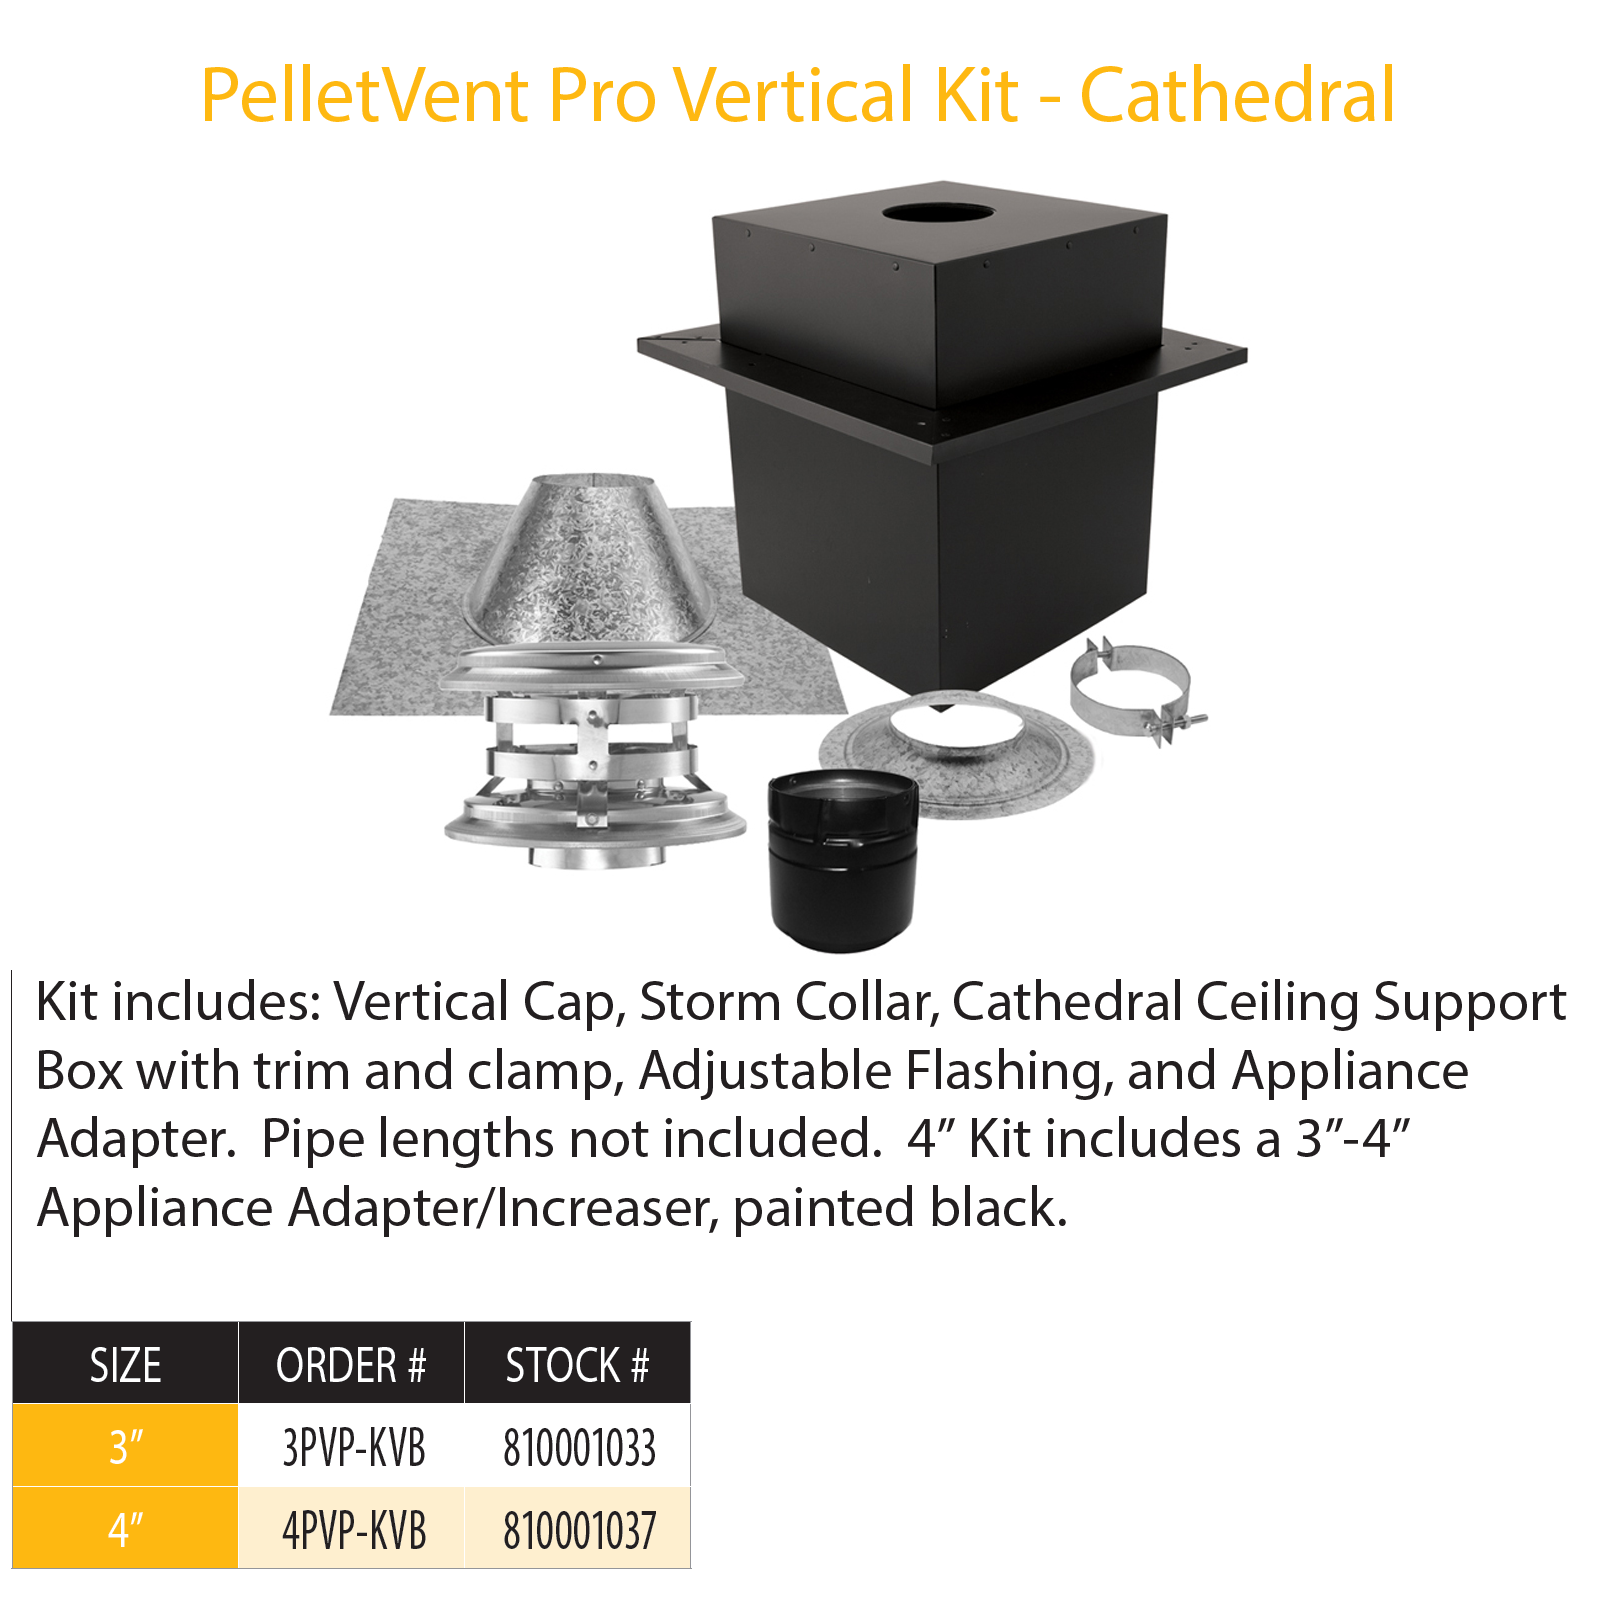 DuraVent Pellet Vent Pro 3" Vertical Kit - Cathedral | 3PVP-KVB